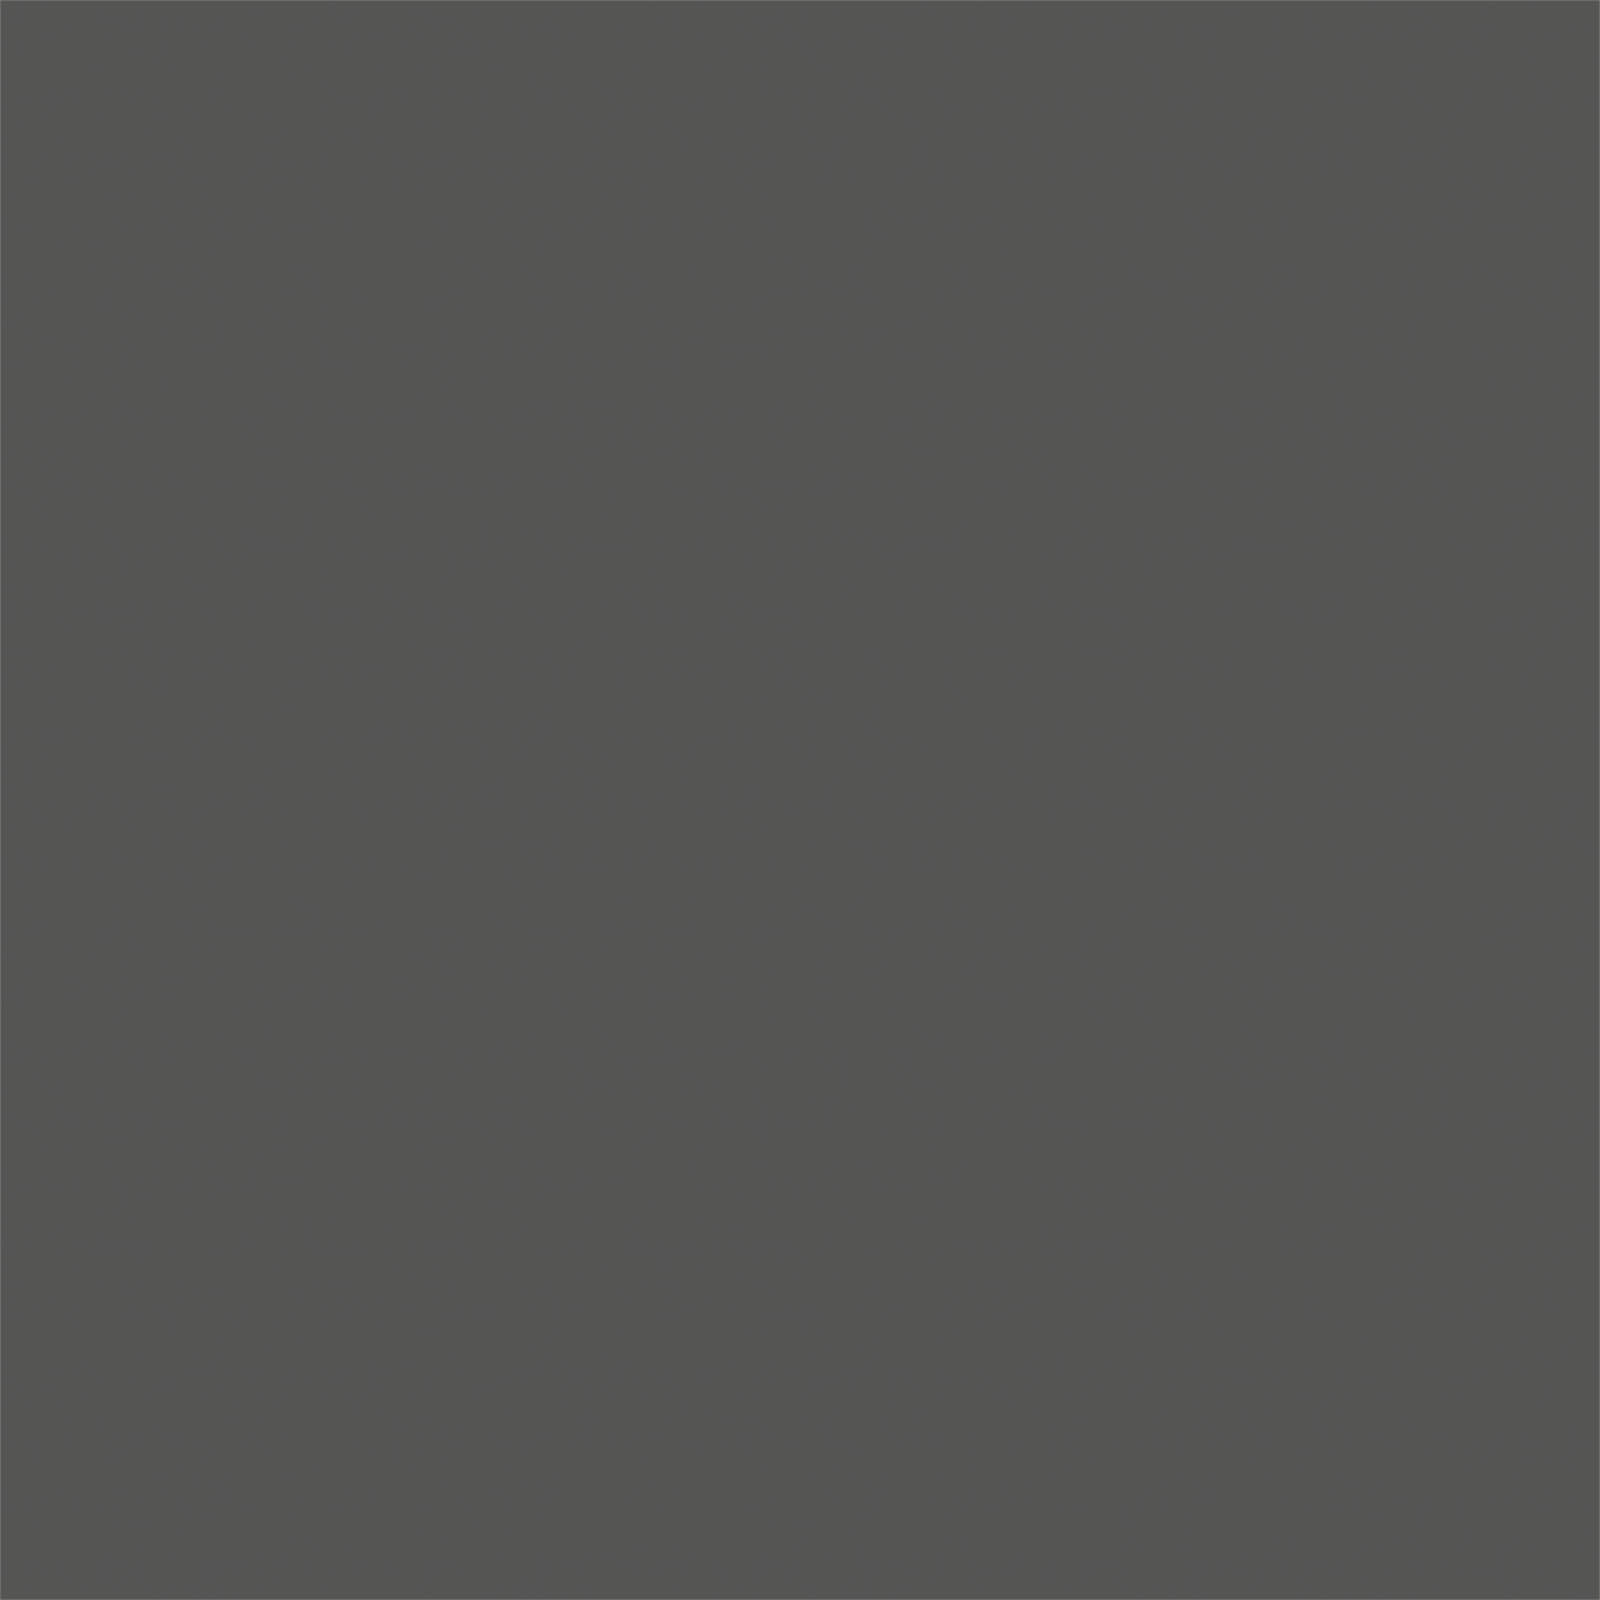 Ronseal Diamond Hard Floor Paint Anthracite - 2.5L